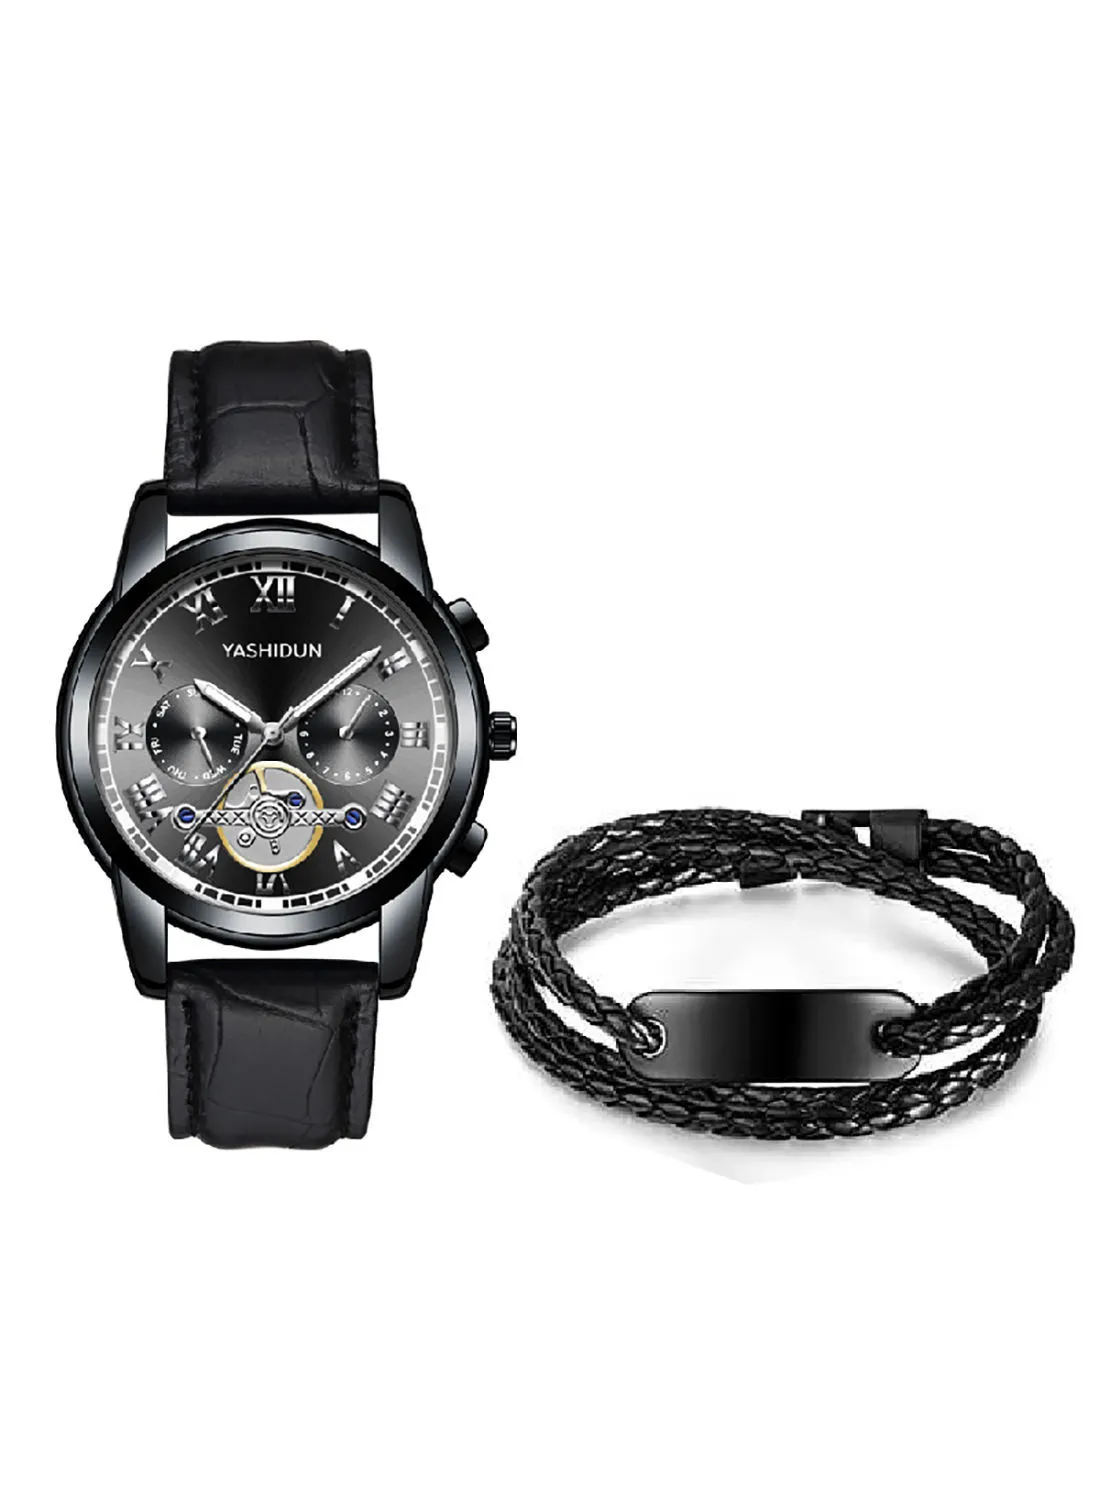 WINSTON Leather Belt Man Watches,Fashion Business Domineering Eye Small Decorative Noctilucent Waterproof Quartz Watch